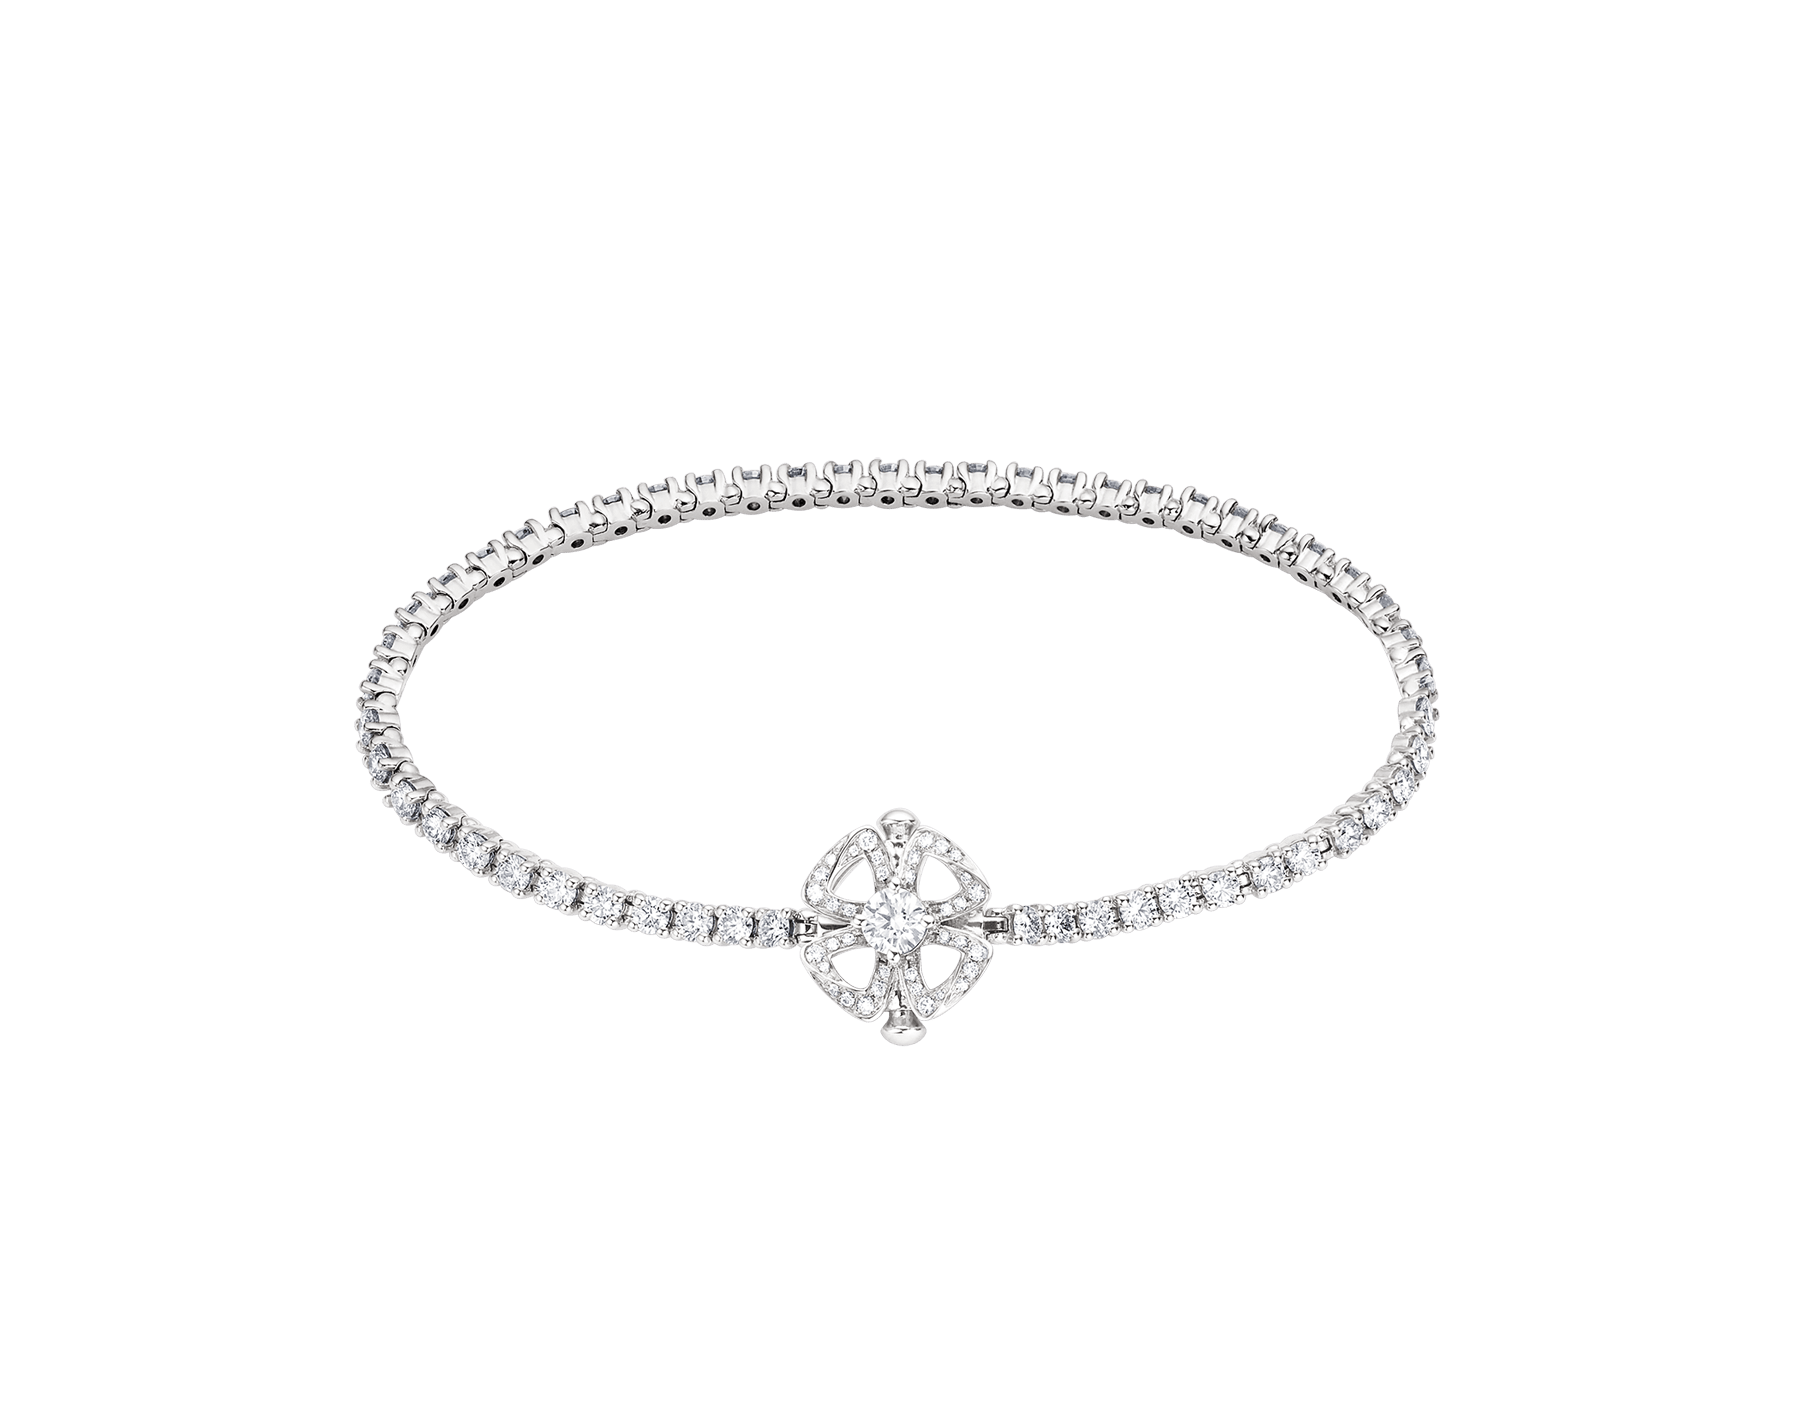 Fiorever 18 kt white gold bracelet set with brilliant-cut diamonds (2.61 ct) and pavé diamonds (0.09 ct). Large size BR859289 image 1